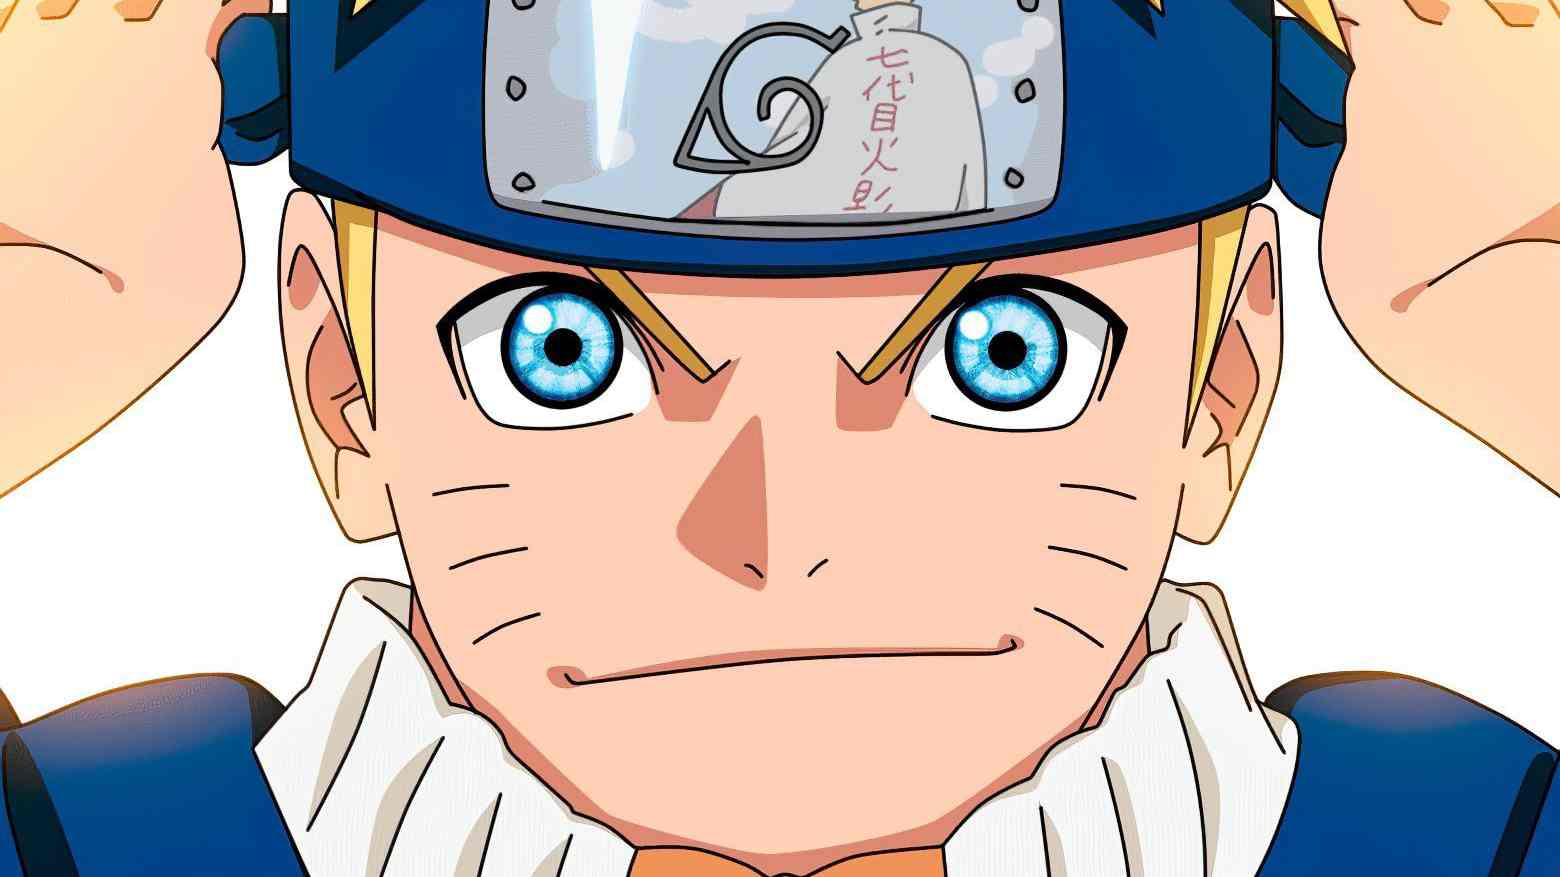 Boruto Part 2 Anime CONFIRMED & Naruto's 20th Anniversary Anime Announced!  